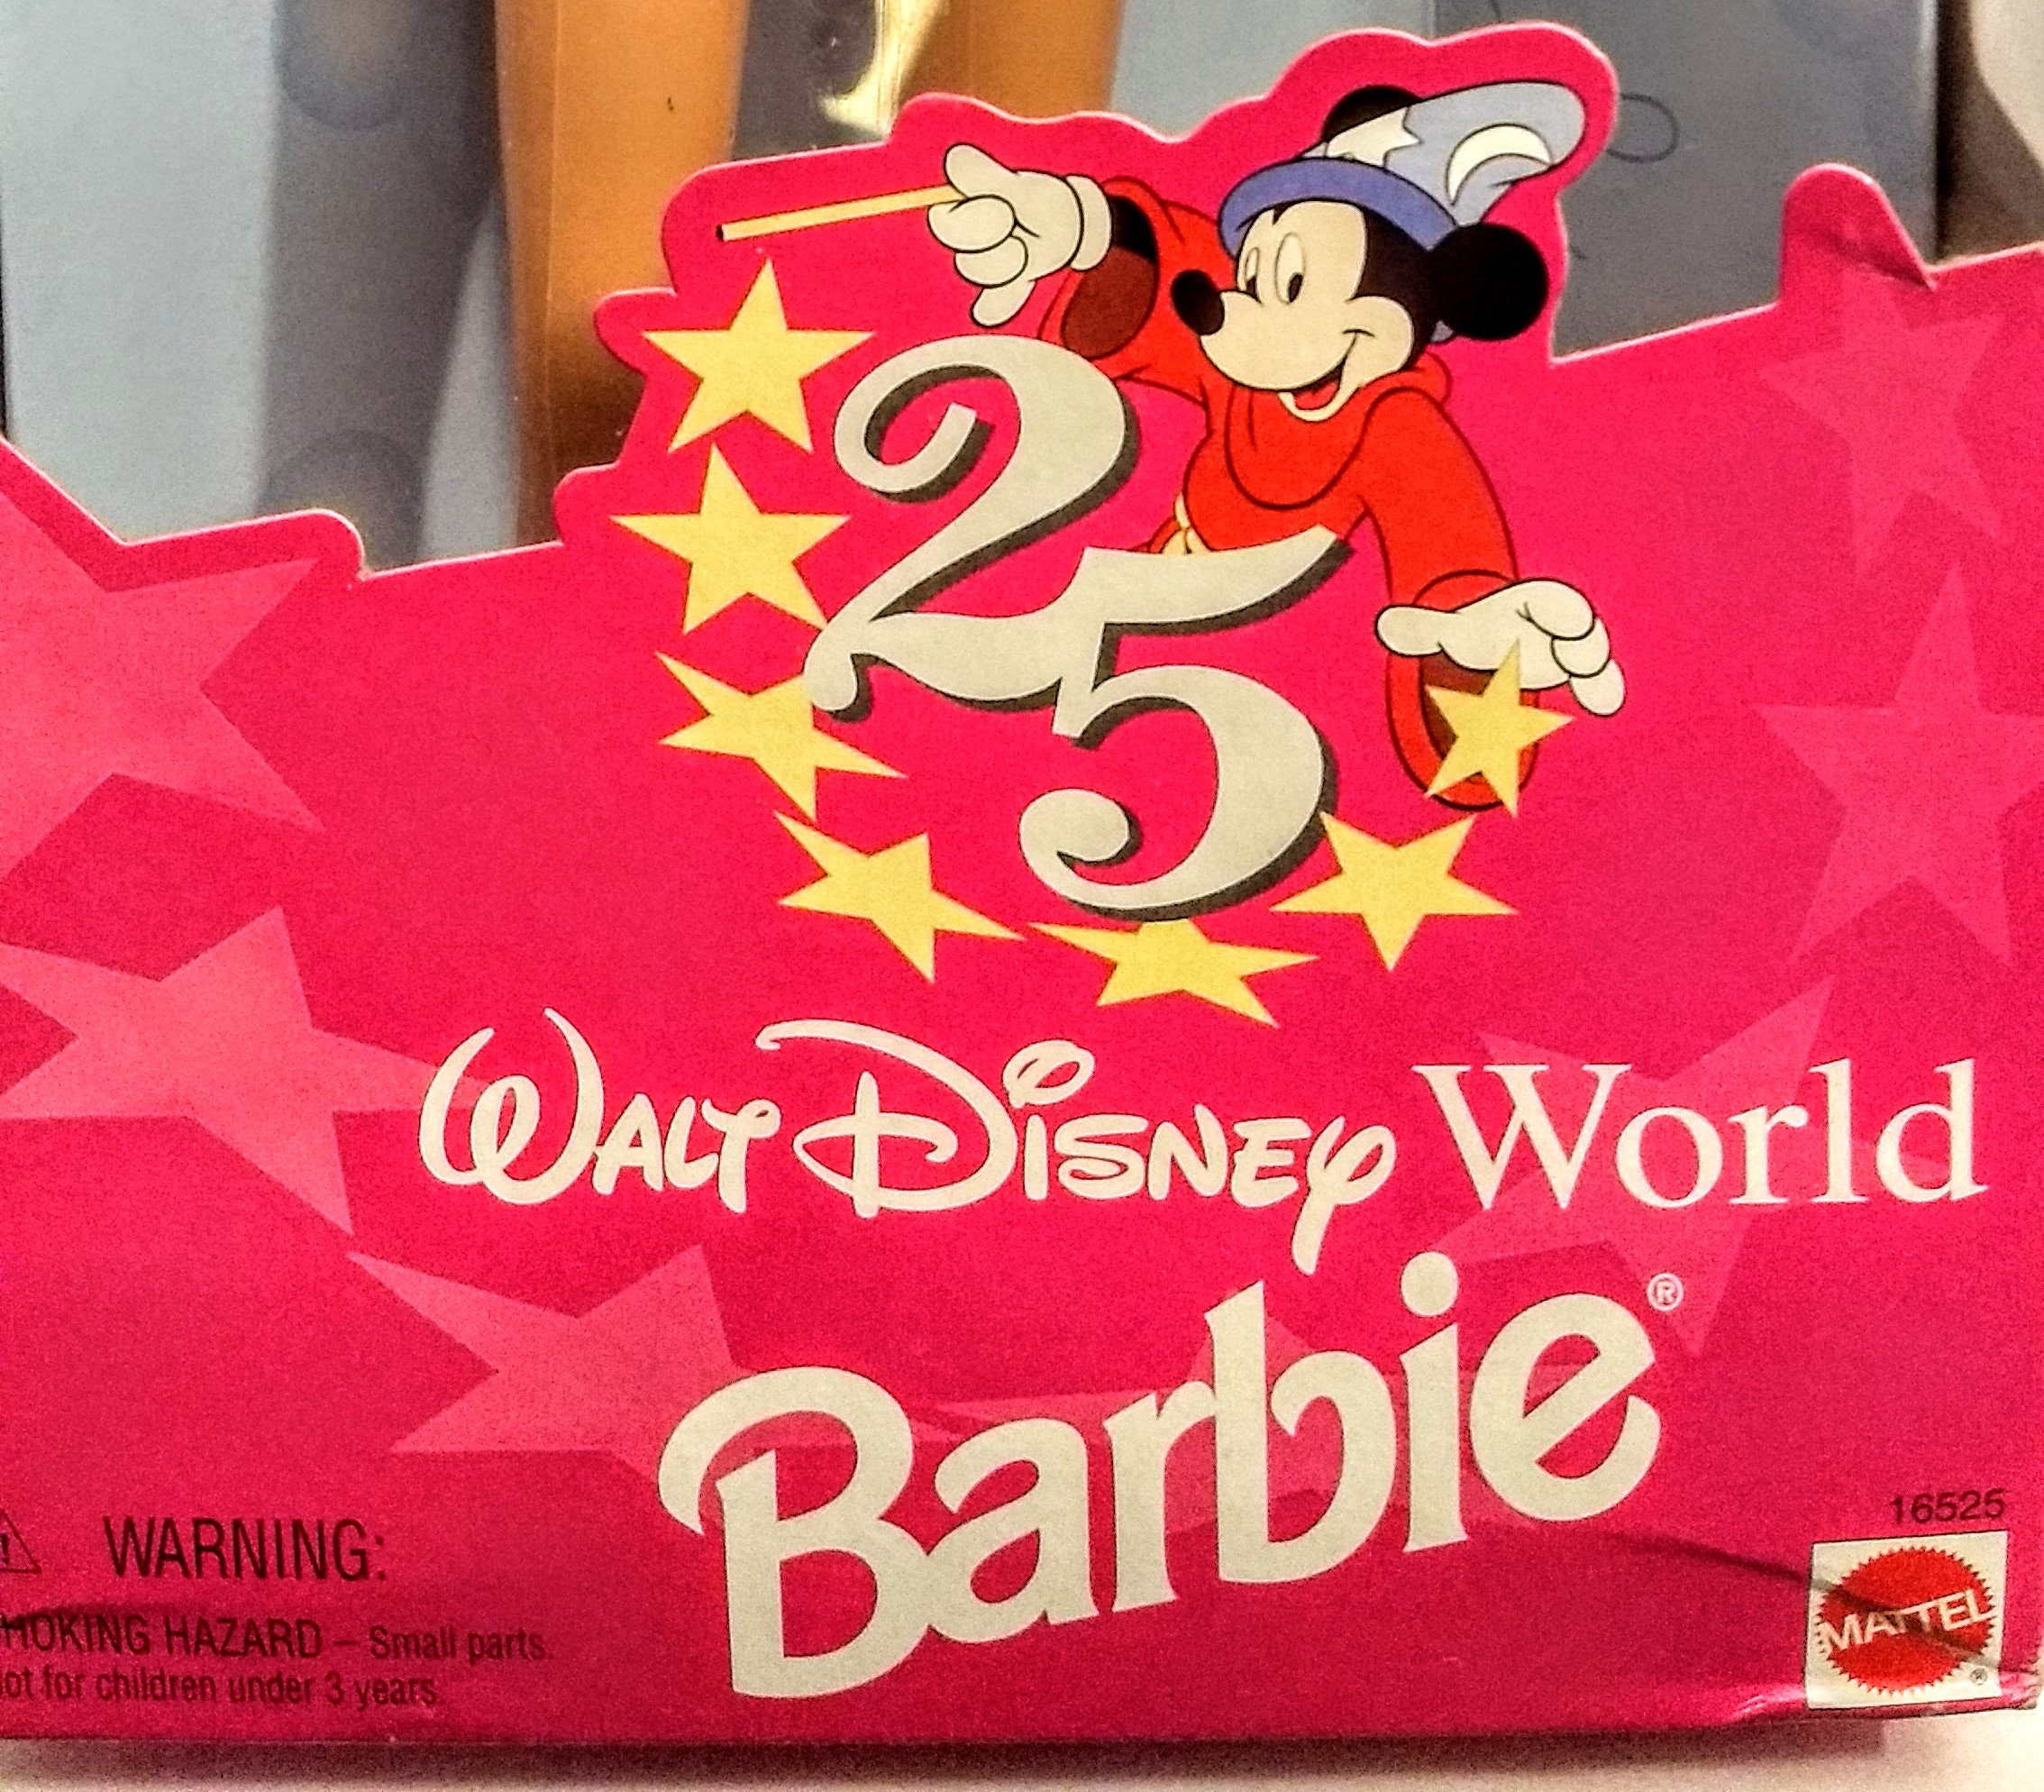 Disney, Barbie, 25th Anniversary of Walt Disney World Authentic